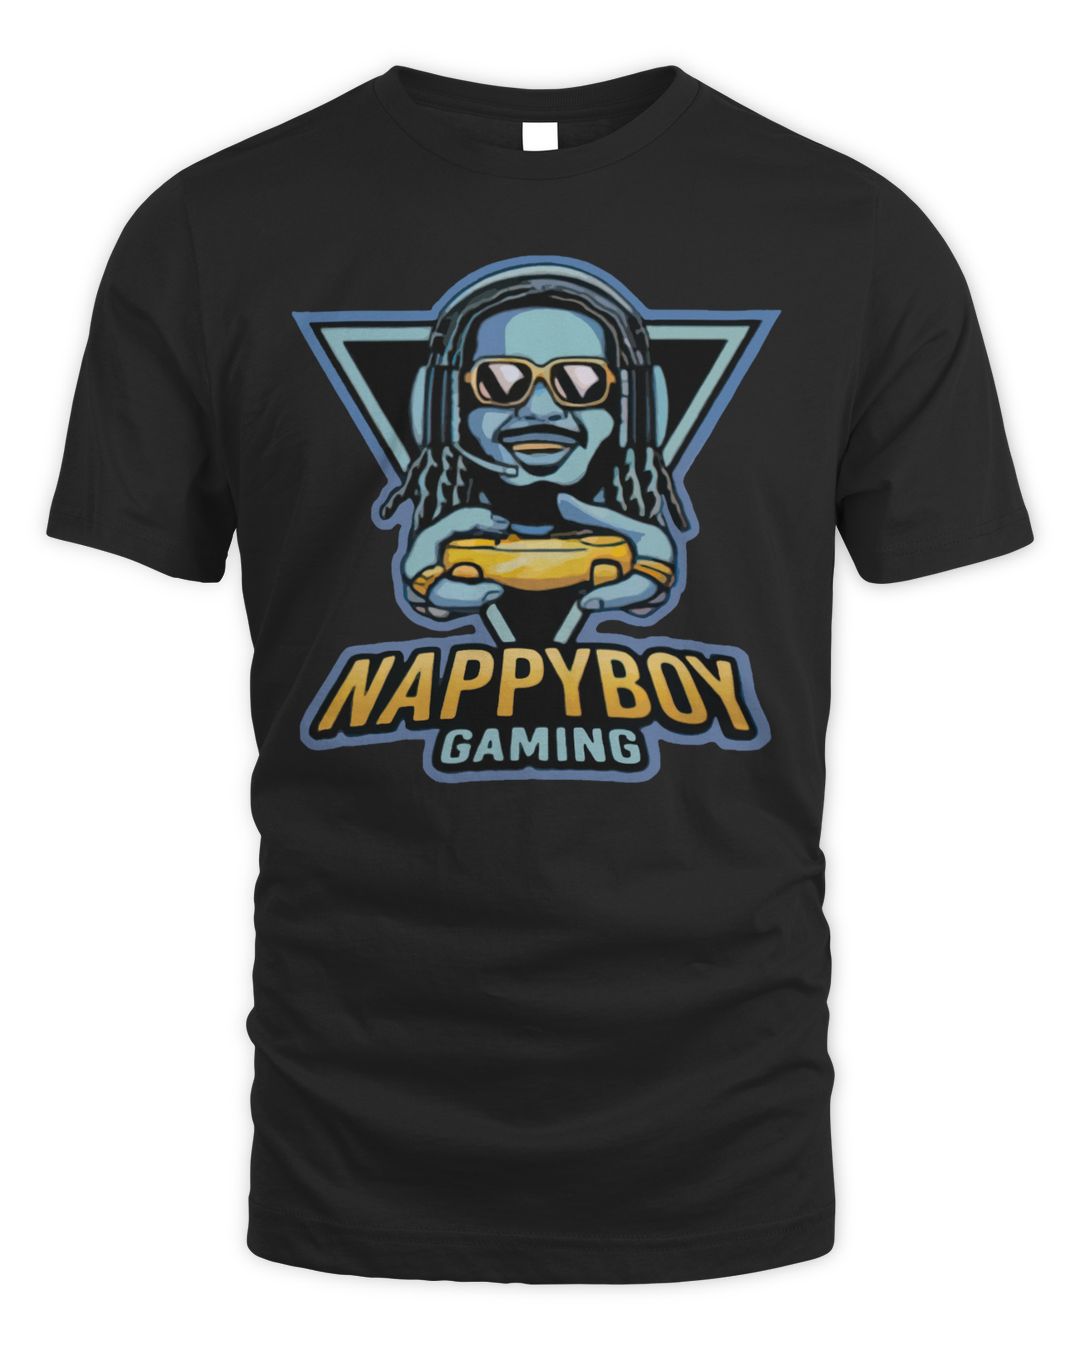 T Pain Merch Nappy Boy Gaming Shirt